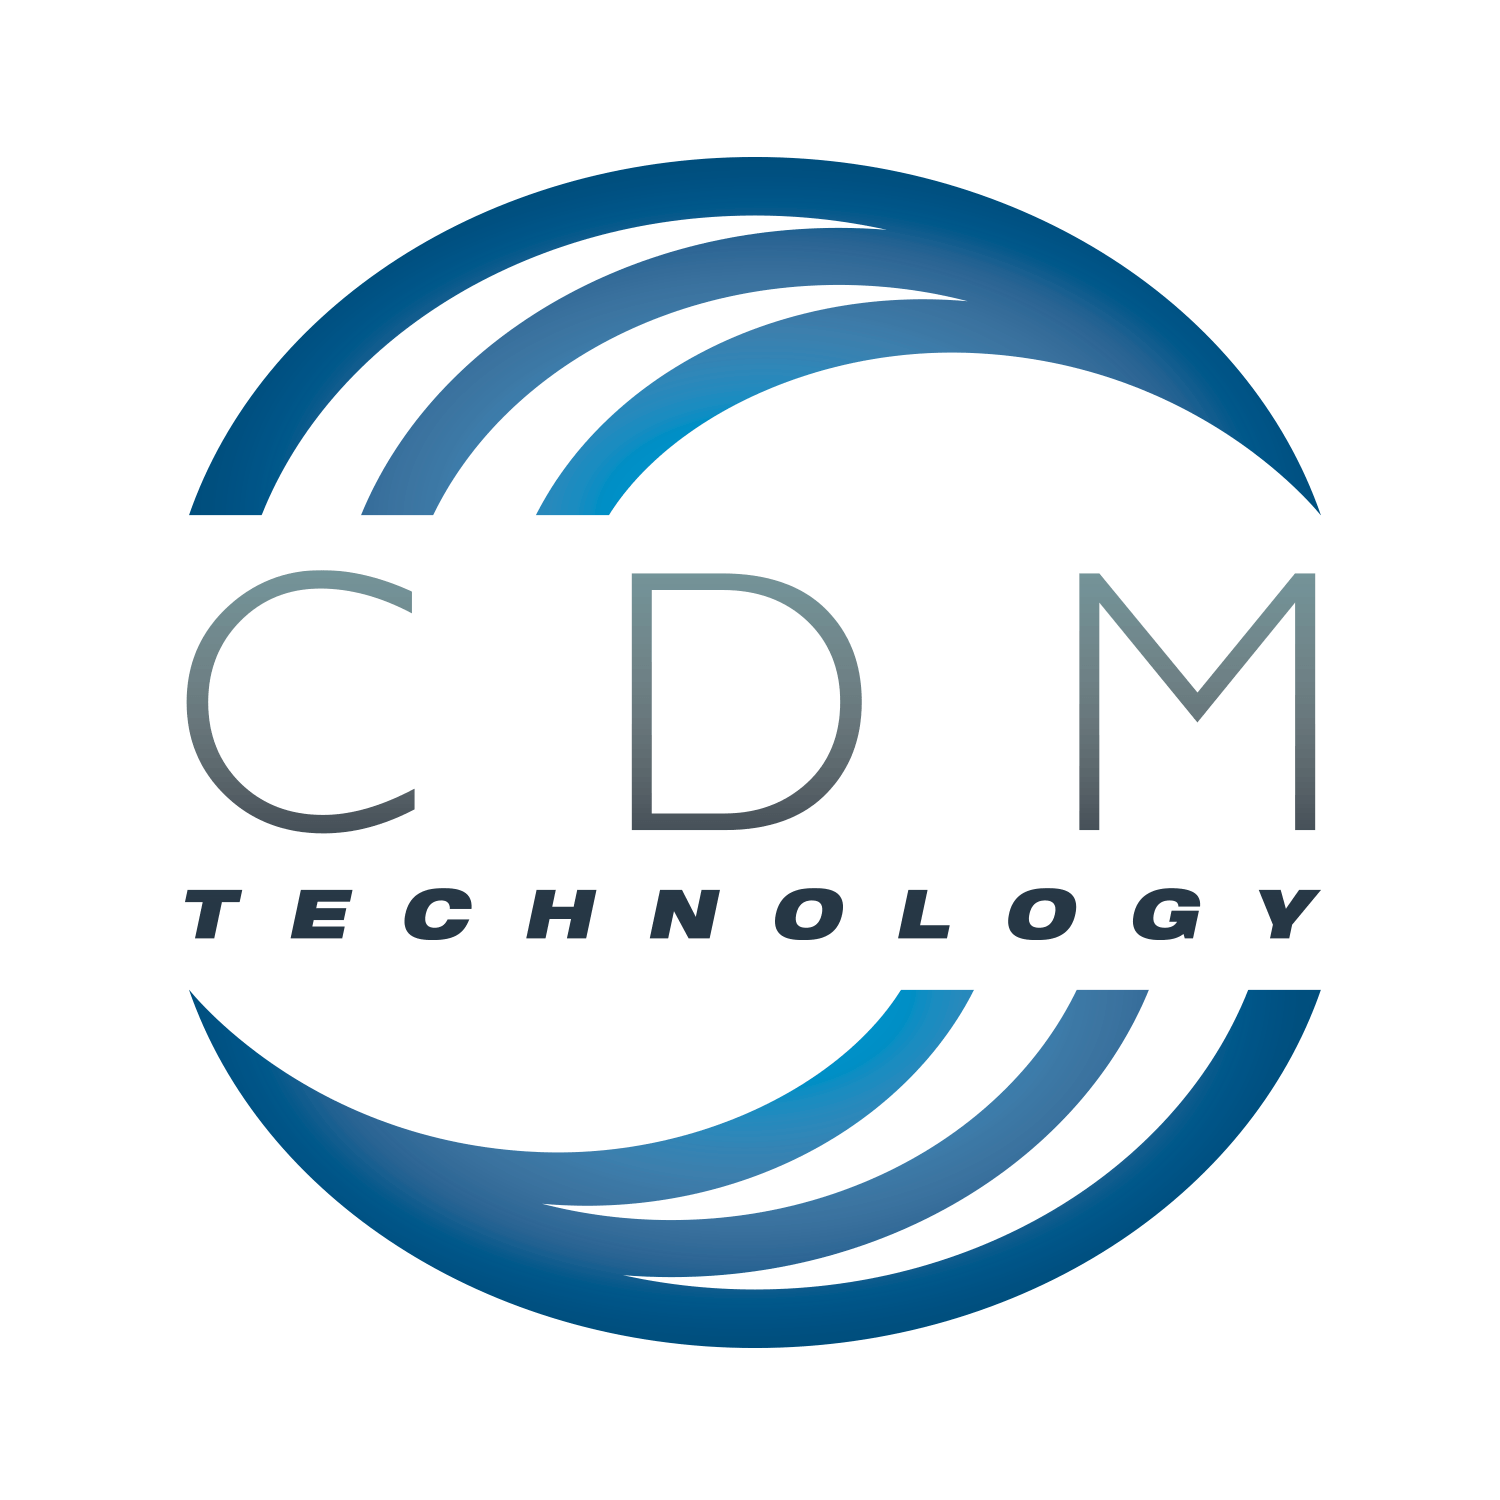 CDM Logo - CDM Technology | IT, Digital Marketing, and Project Management ...